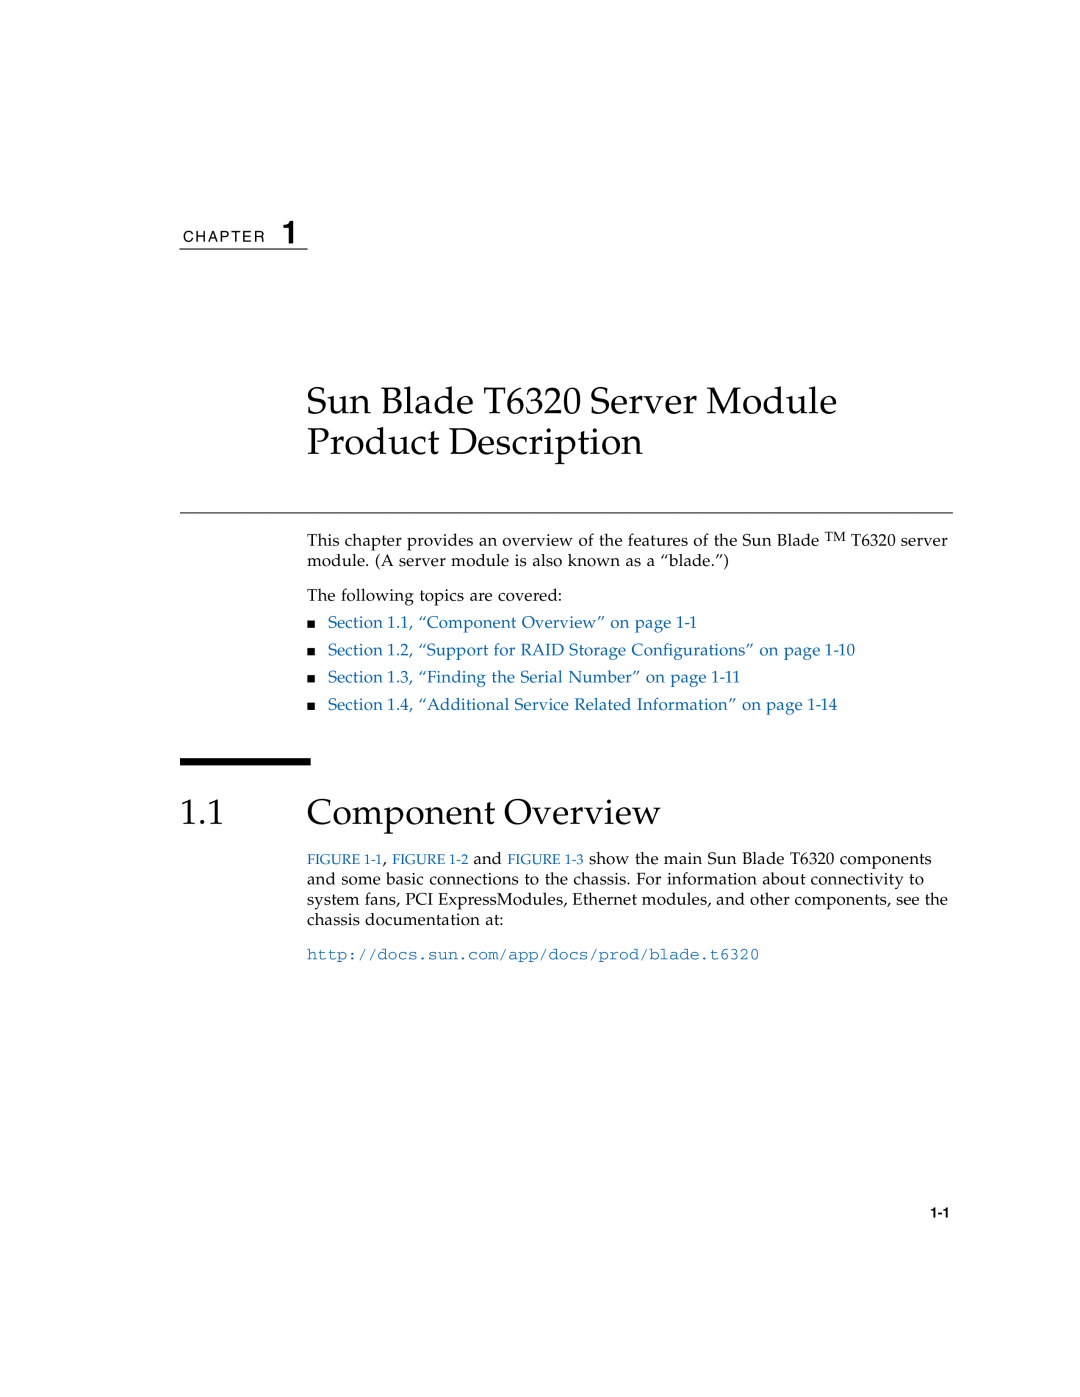 Sun Microsystems service manual Sun Blade T6320 Server Module Product Description, 1, “Component Overview” on page 